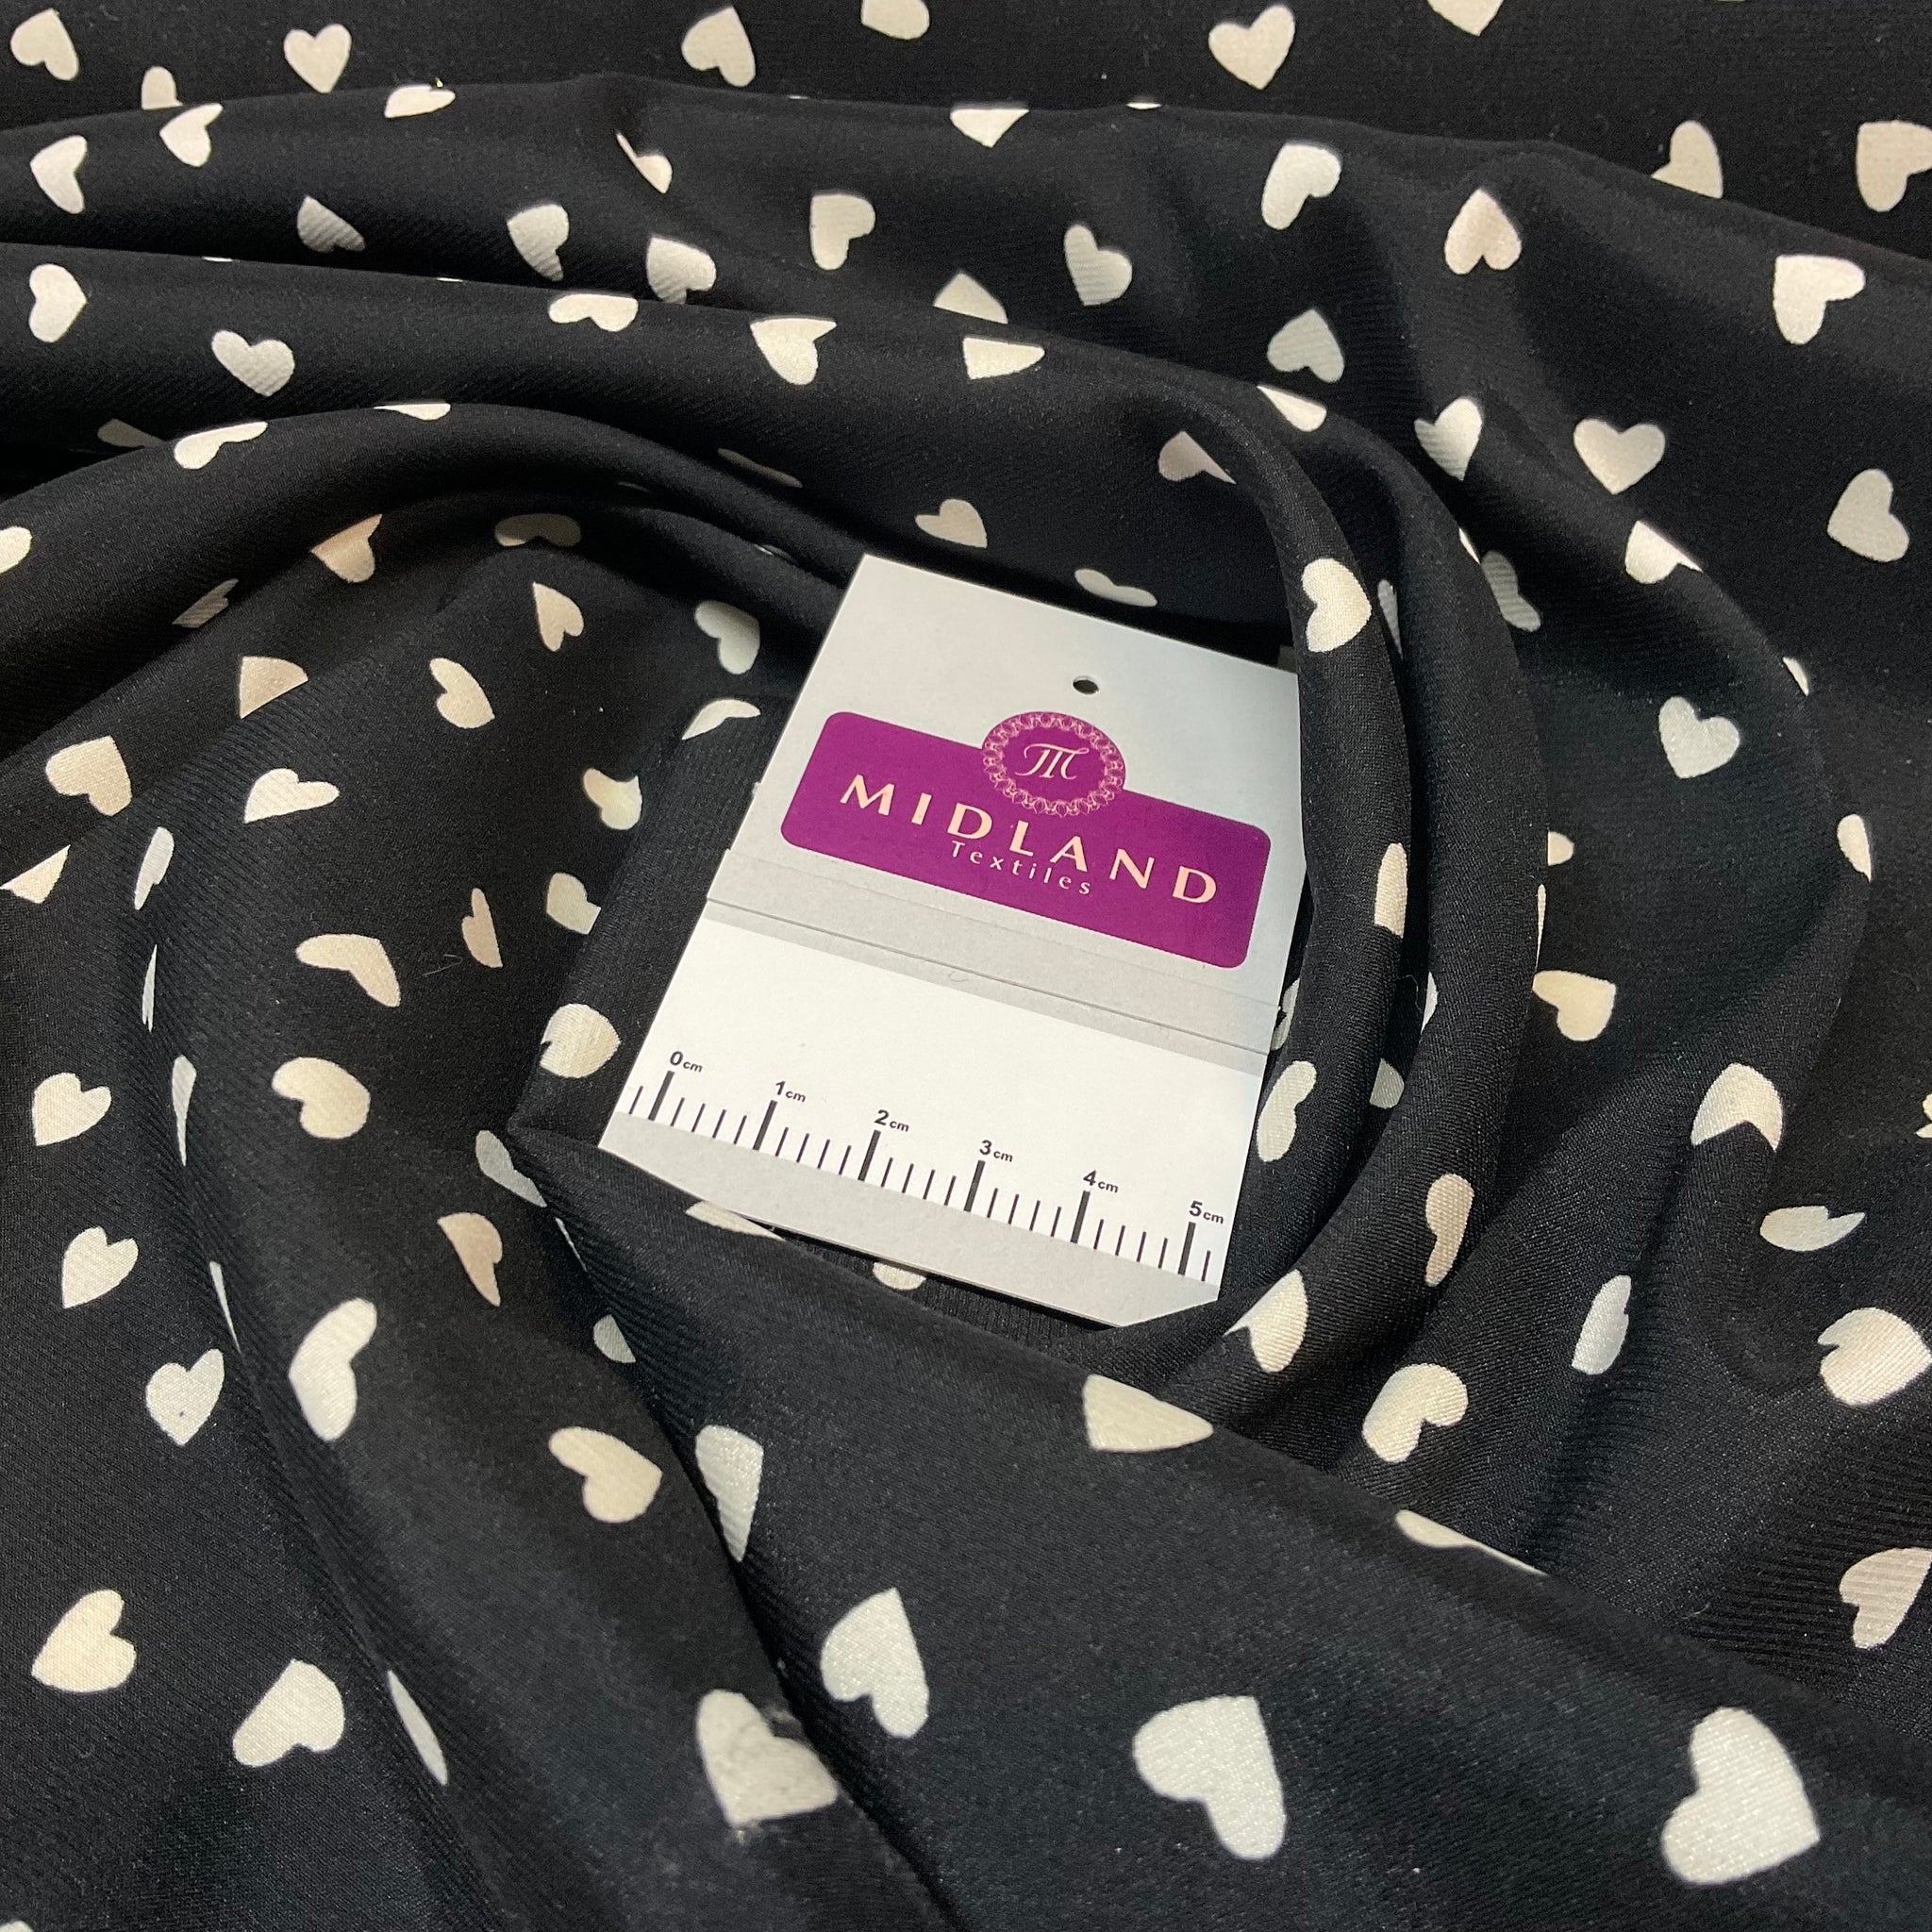 Black & White Heart SHaped polka-dot Dress Fabric 100% Polyester Satin 145cm width M1400-42